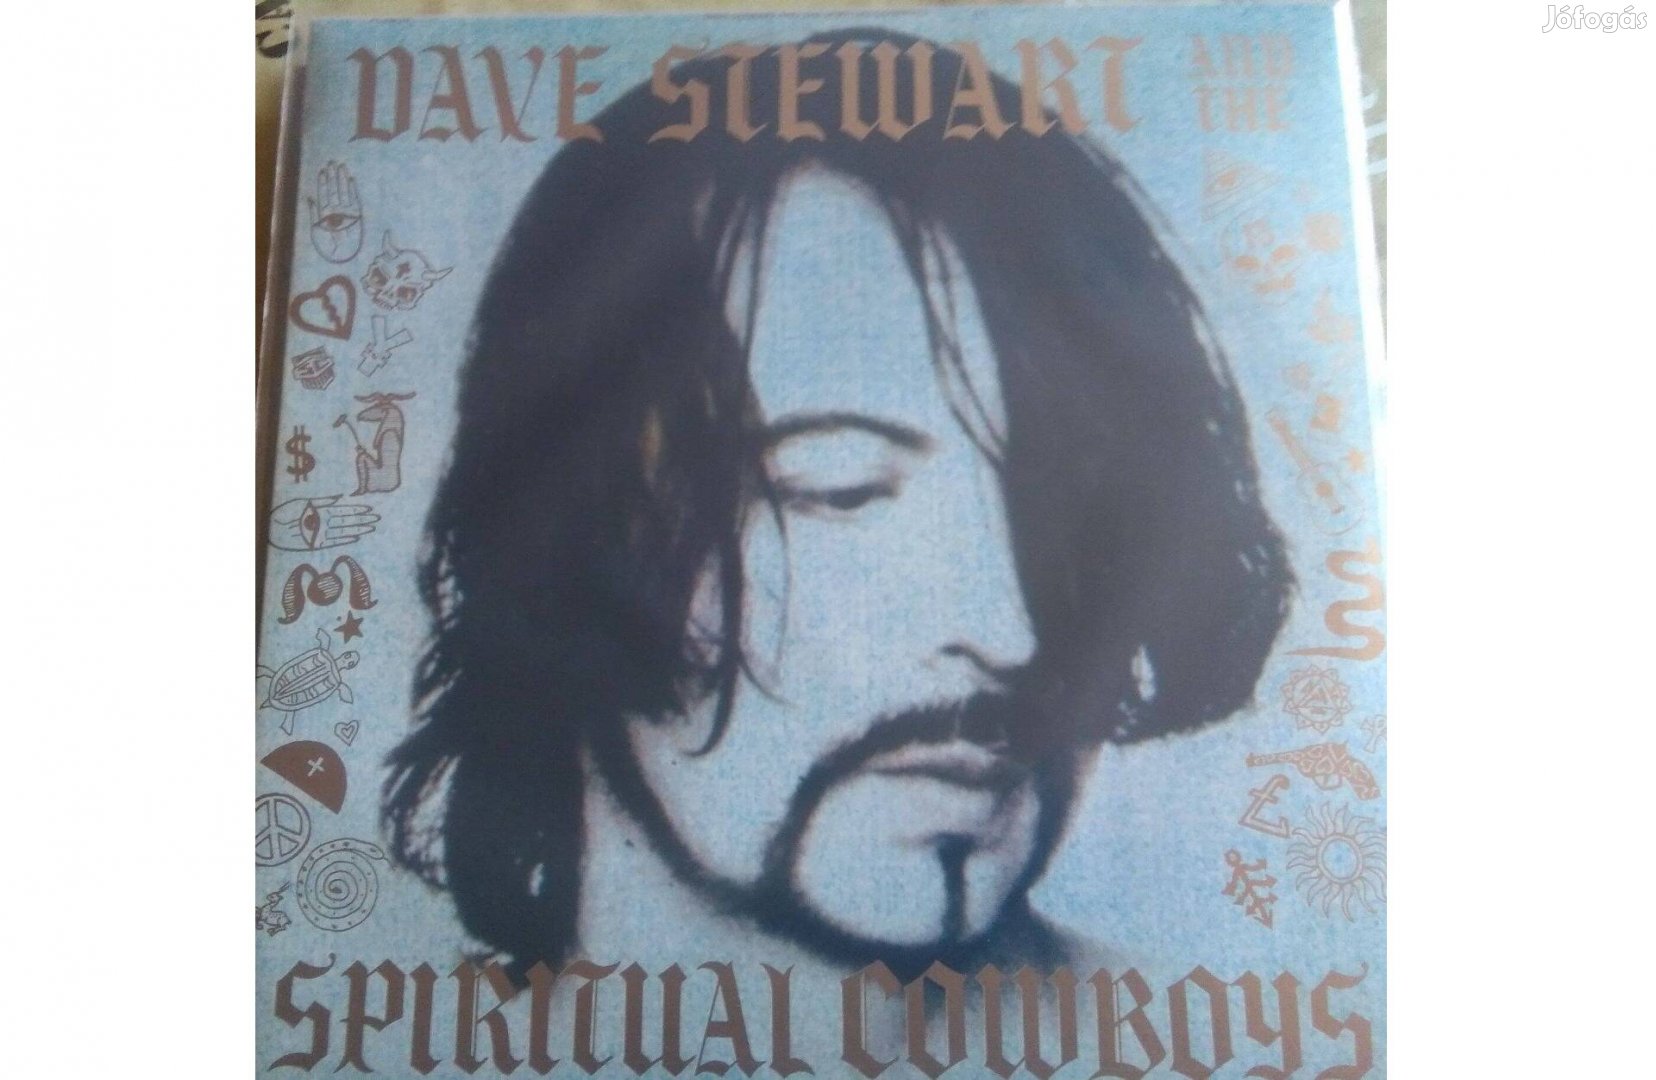 Dave Stewart bakelit hanglemez eladó